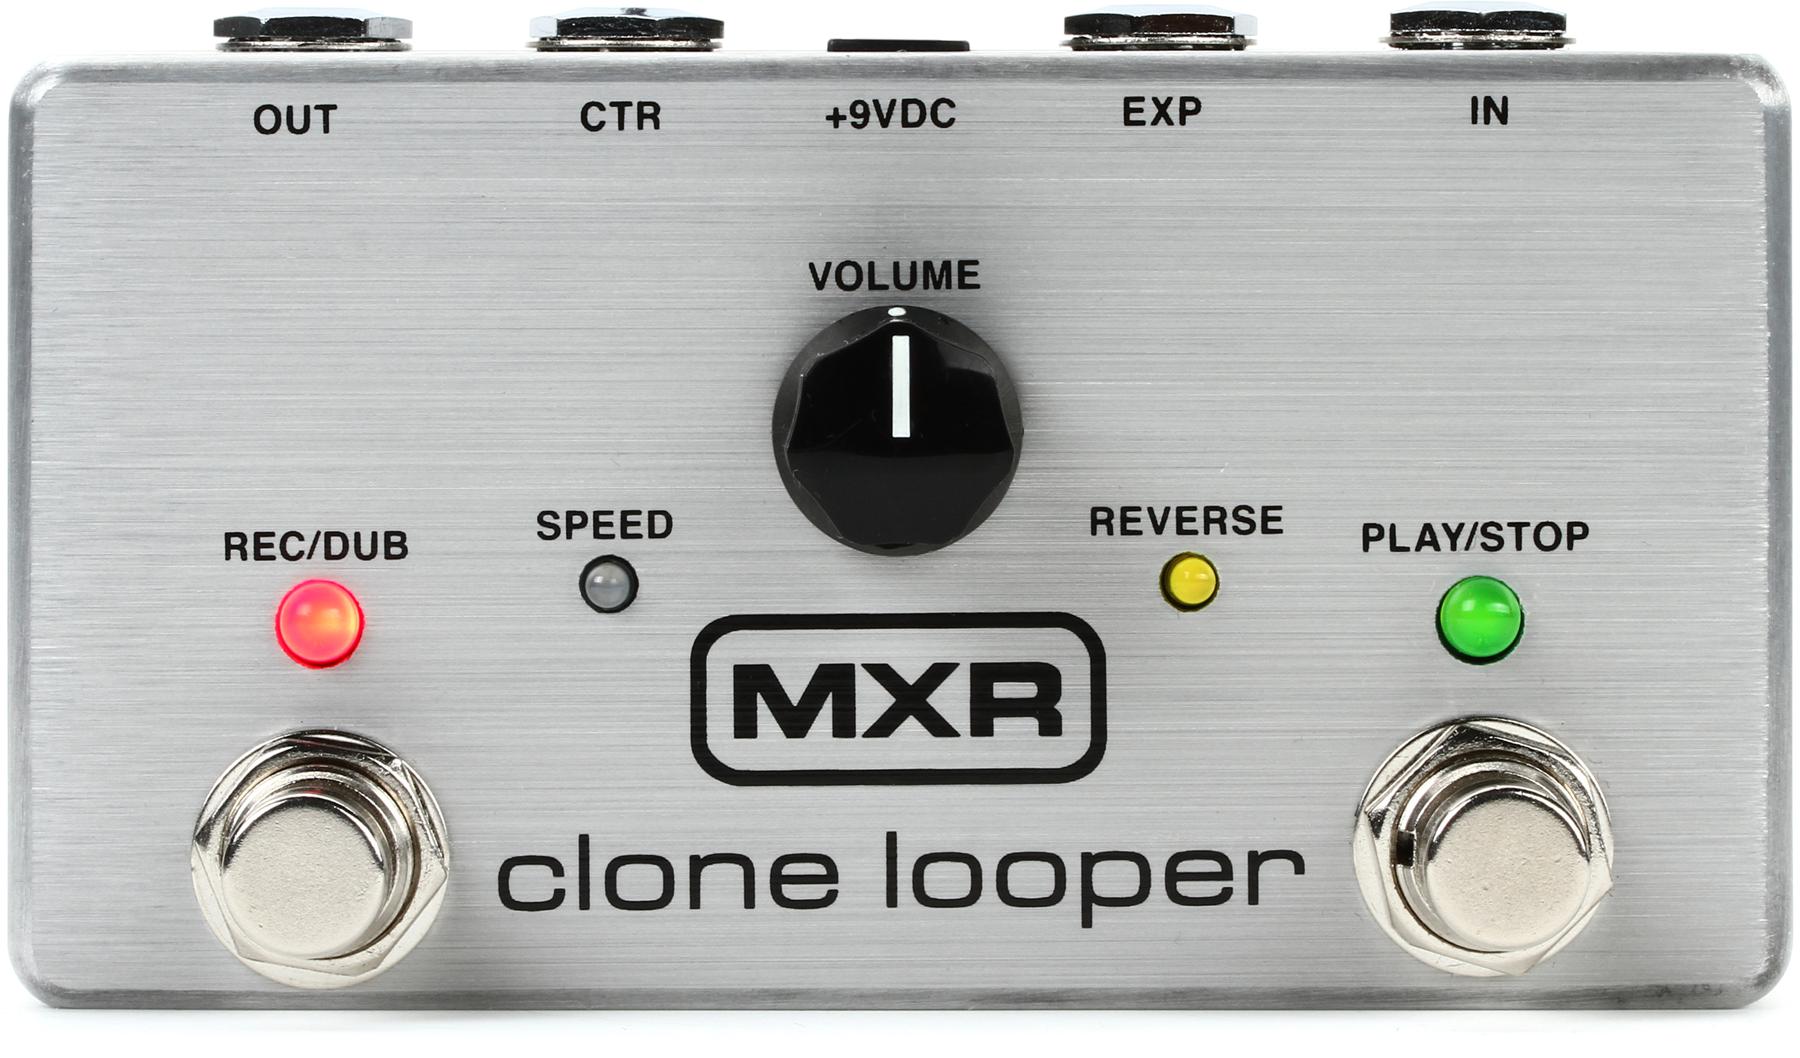 4. MXR Clone Looper Guitar Effects Pedal (M303)